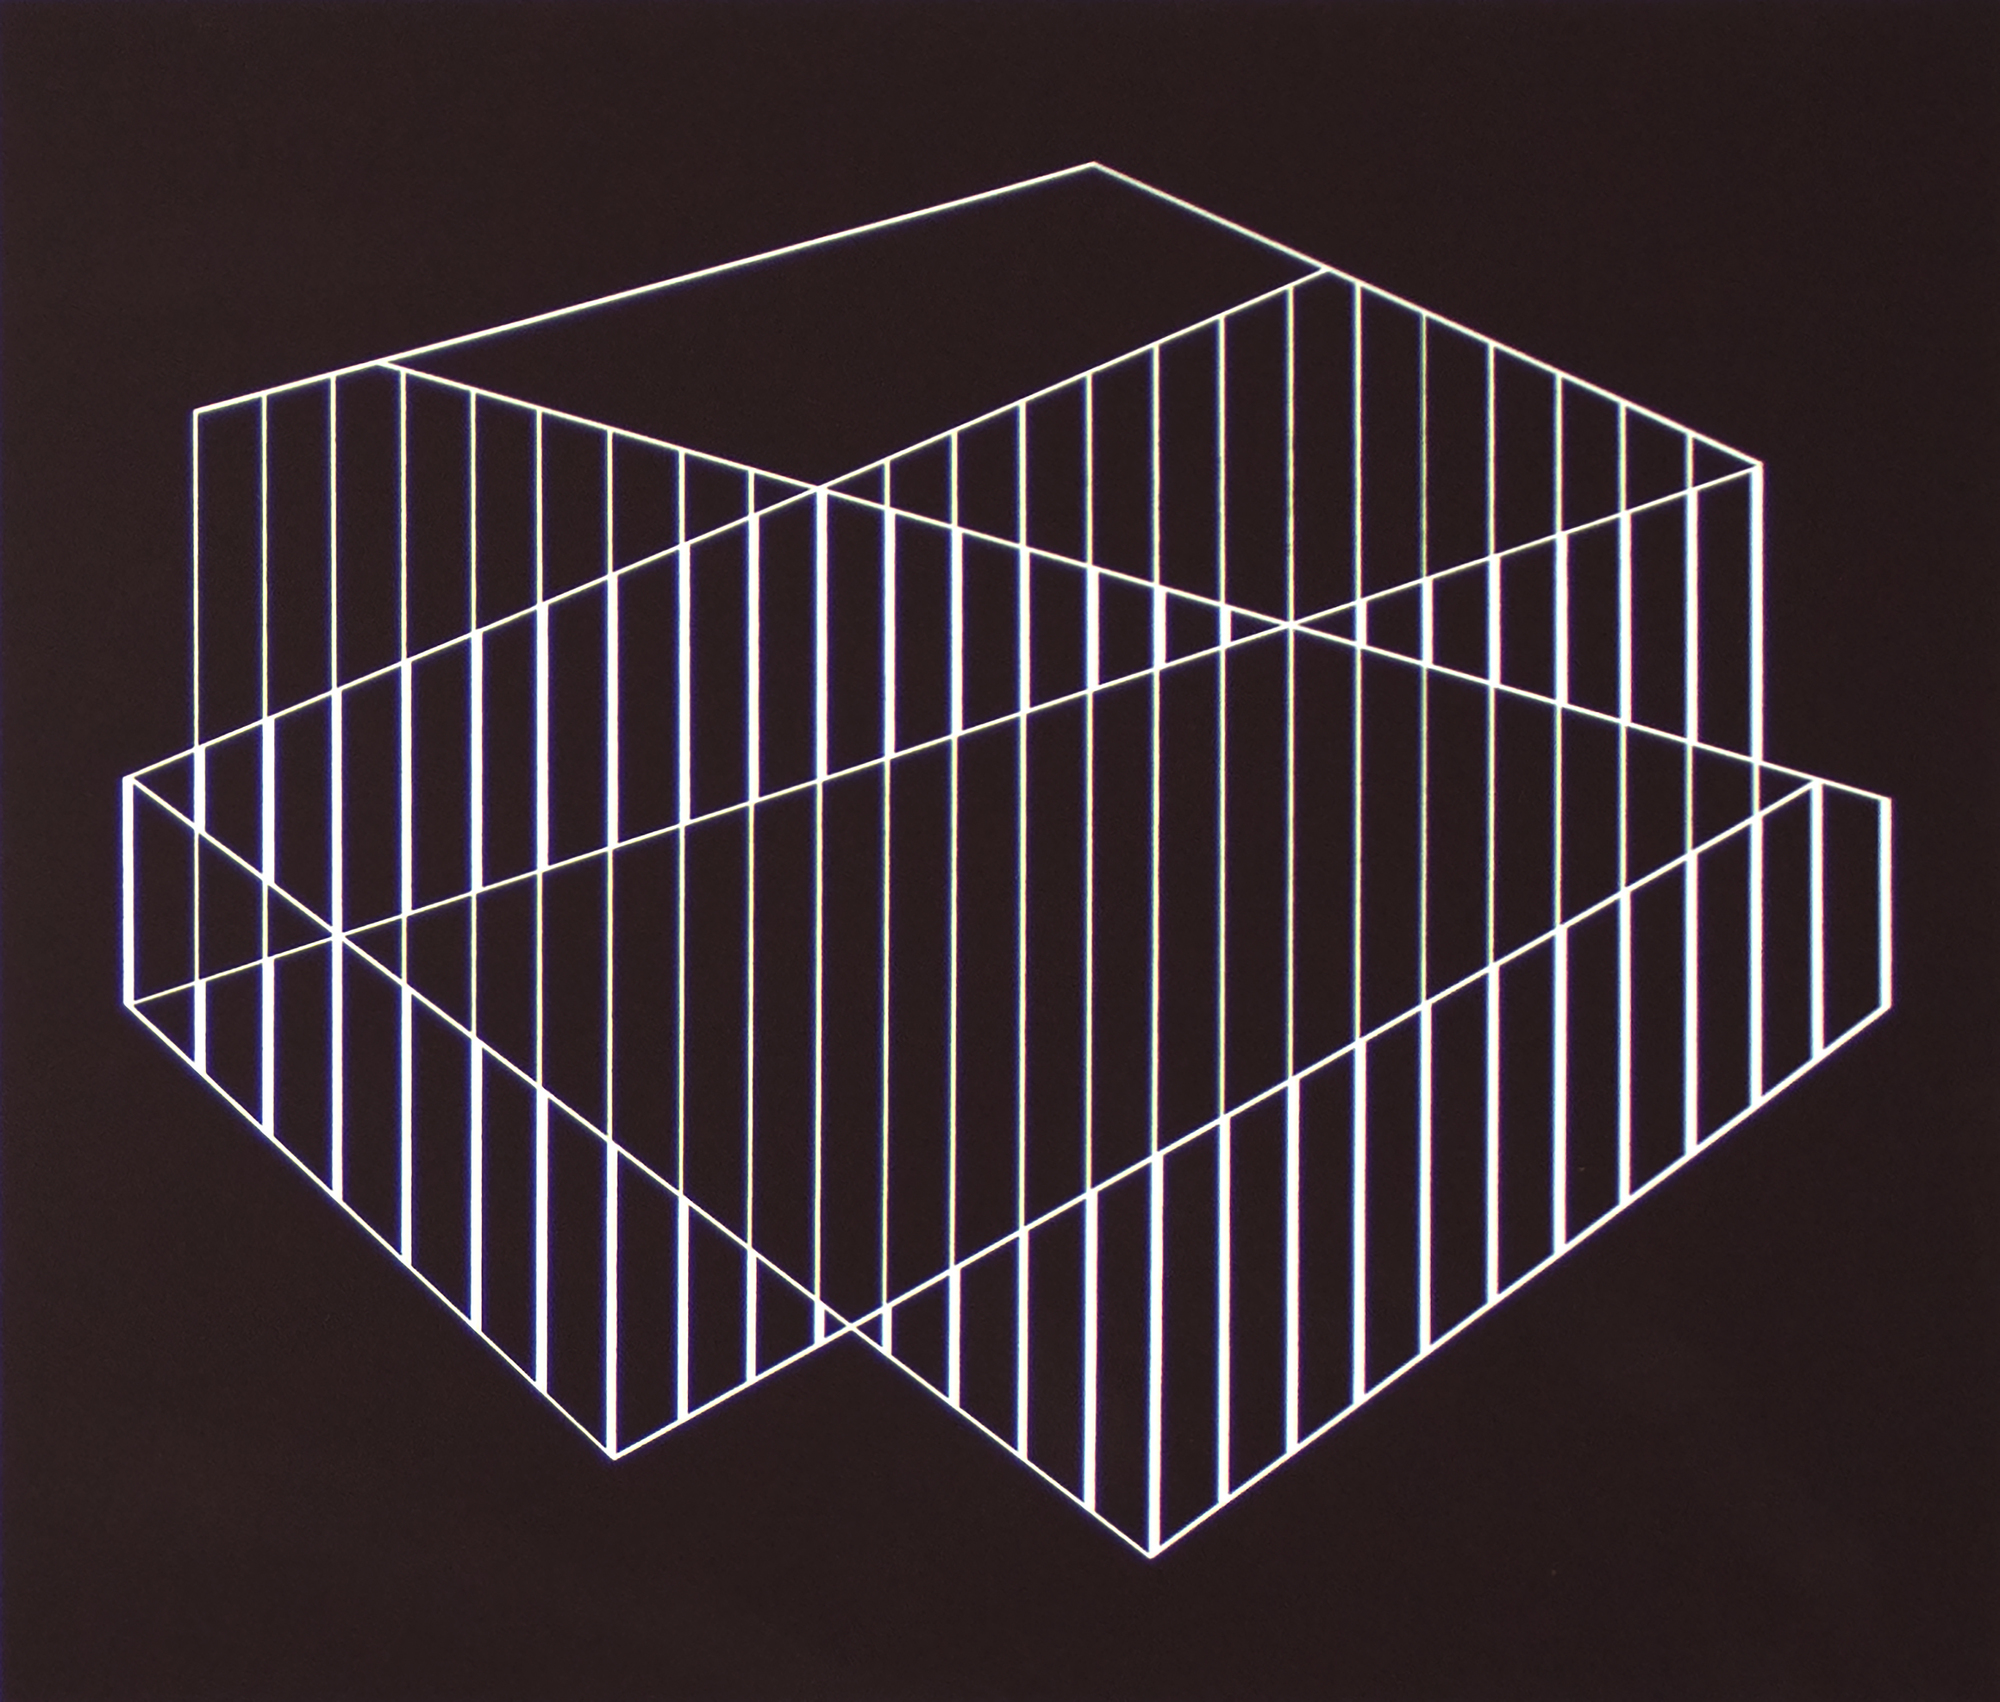 JOSEF ALBERS - Formulation: Articulation - screenprint - 12 x 14 5/8 in. ea.